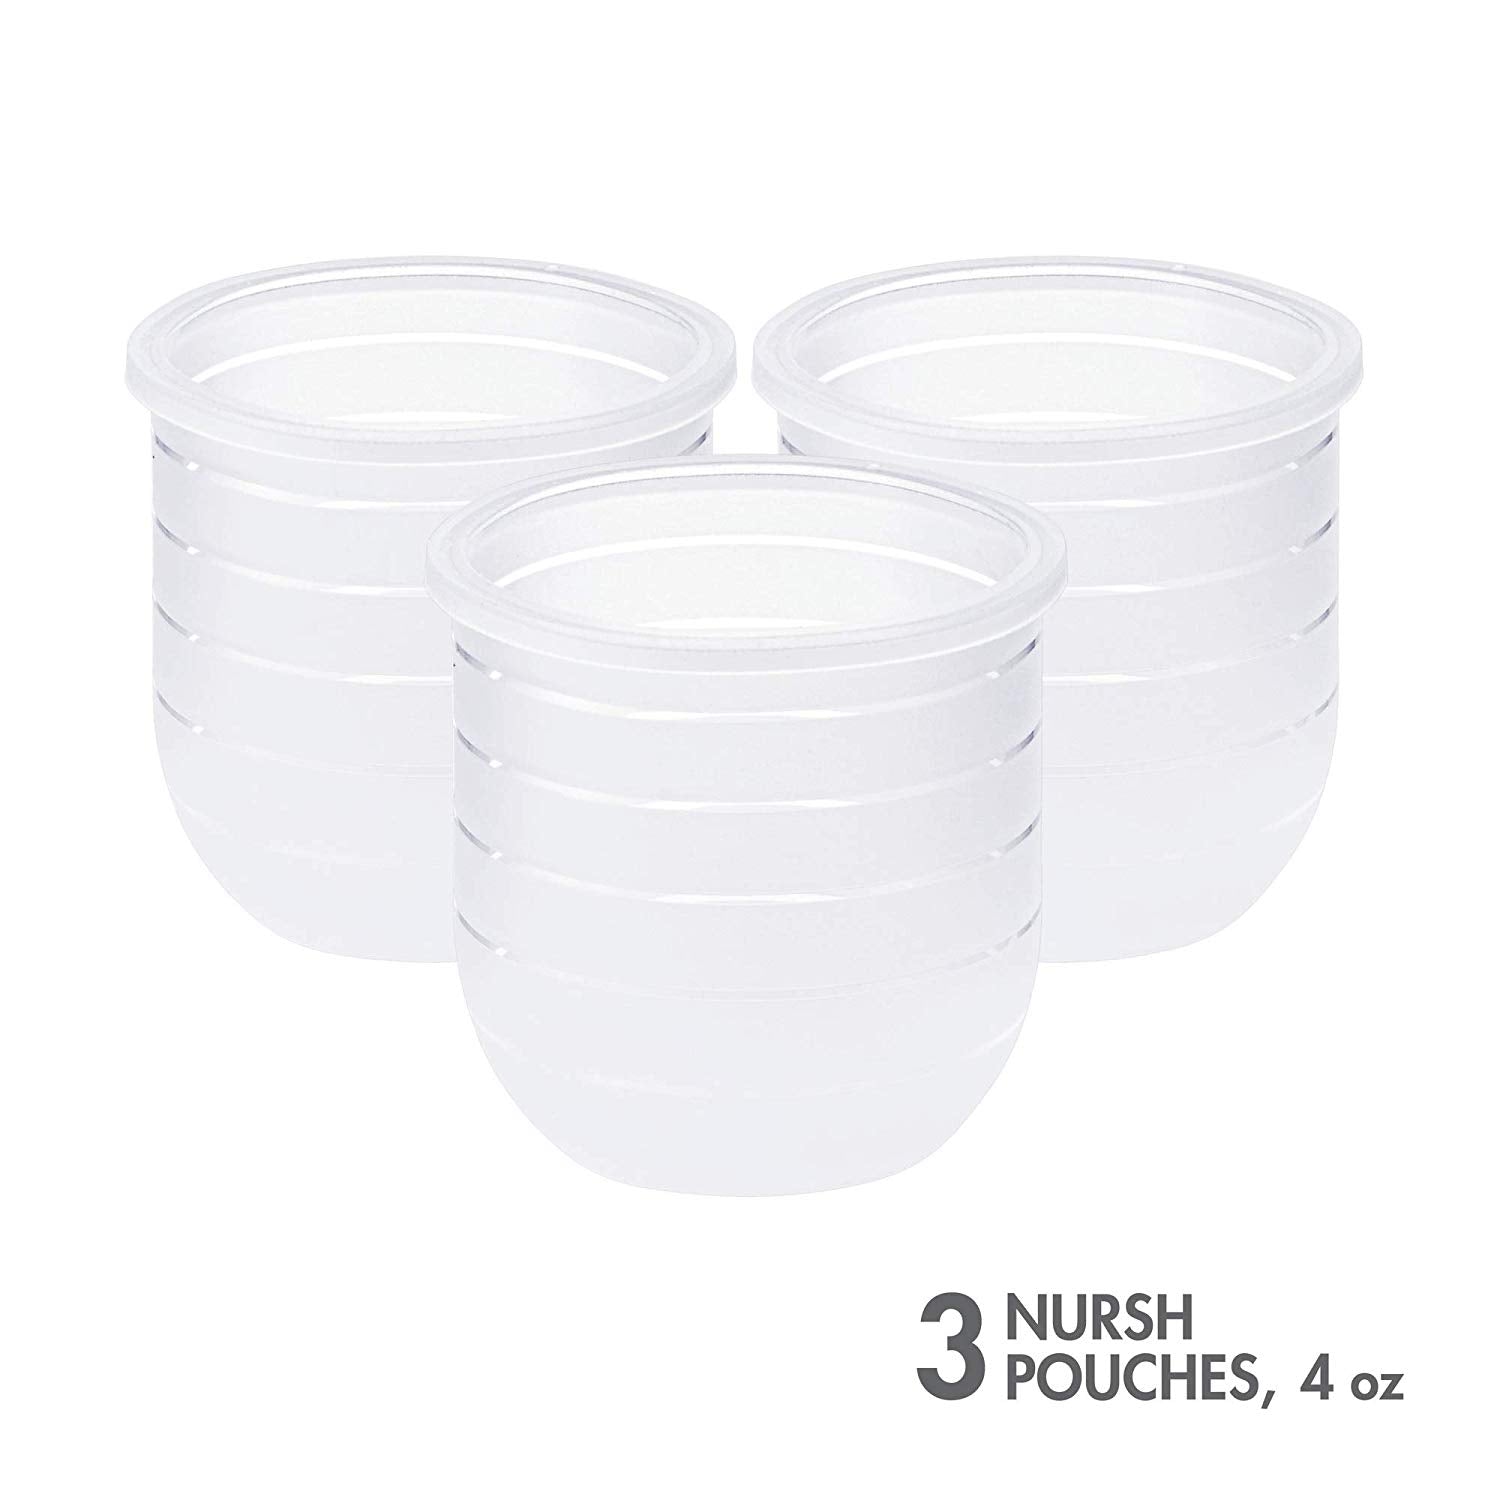 NURSH Silicone Pouches - 3 Pack 4oz